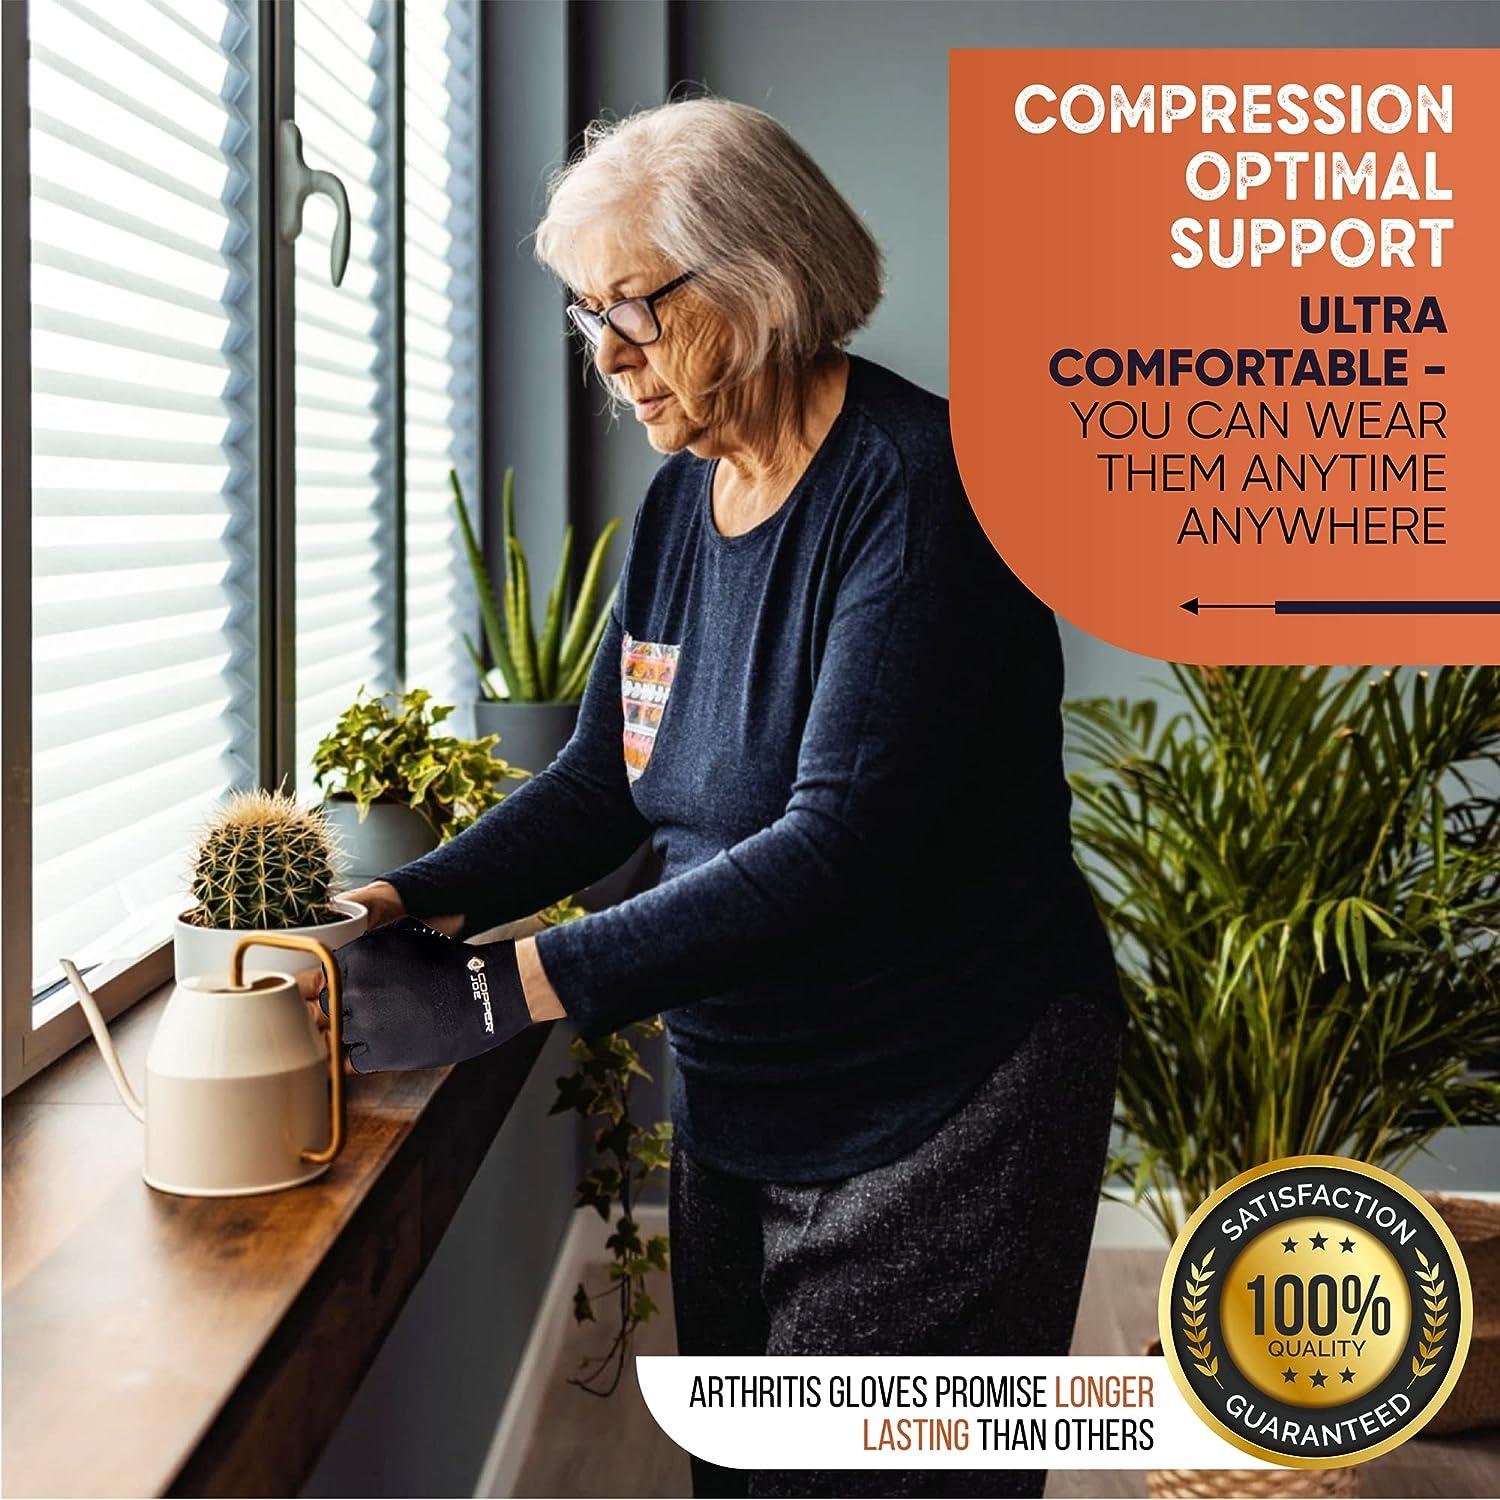 Copper Joe Arthritis Gloves - Compression Gloves for Arthritis